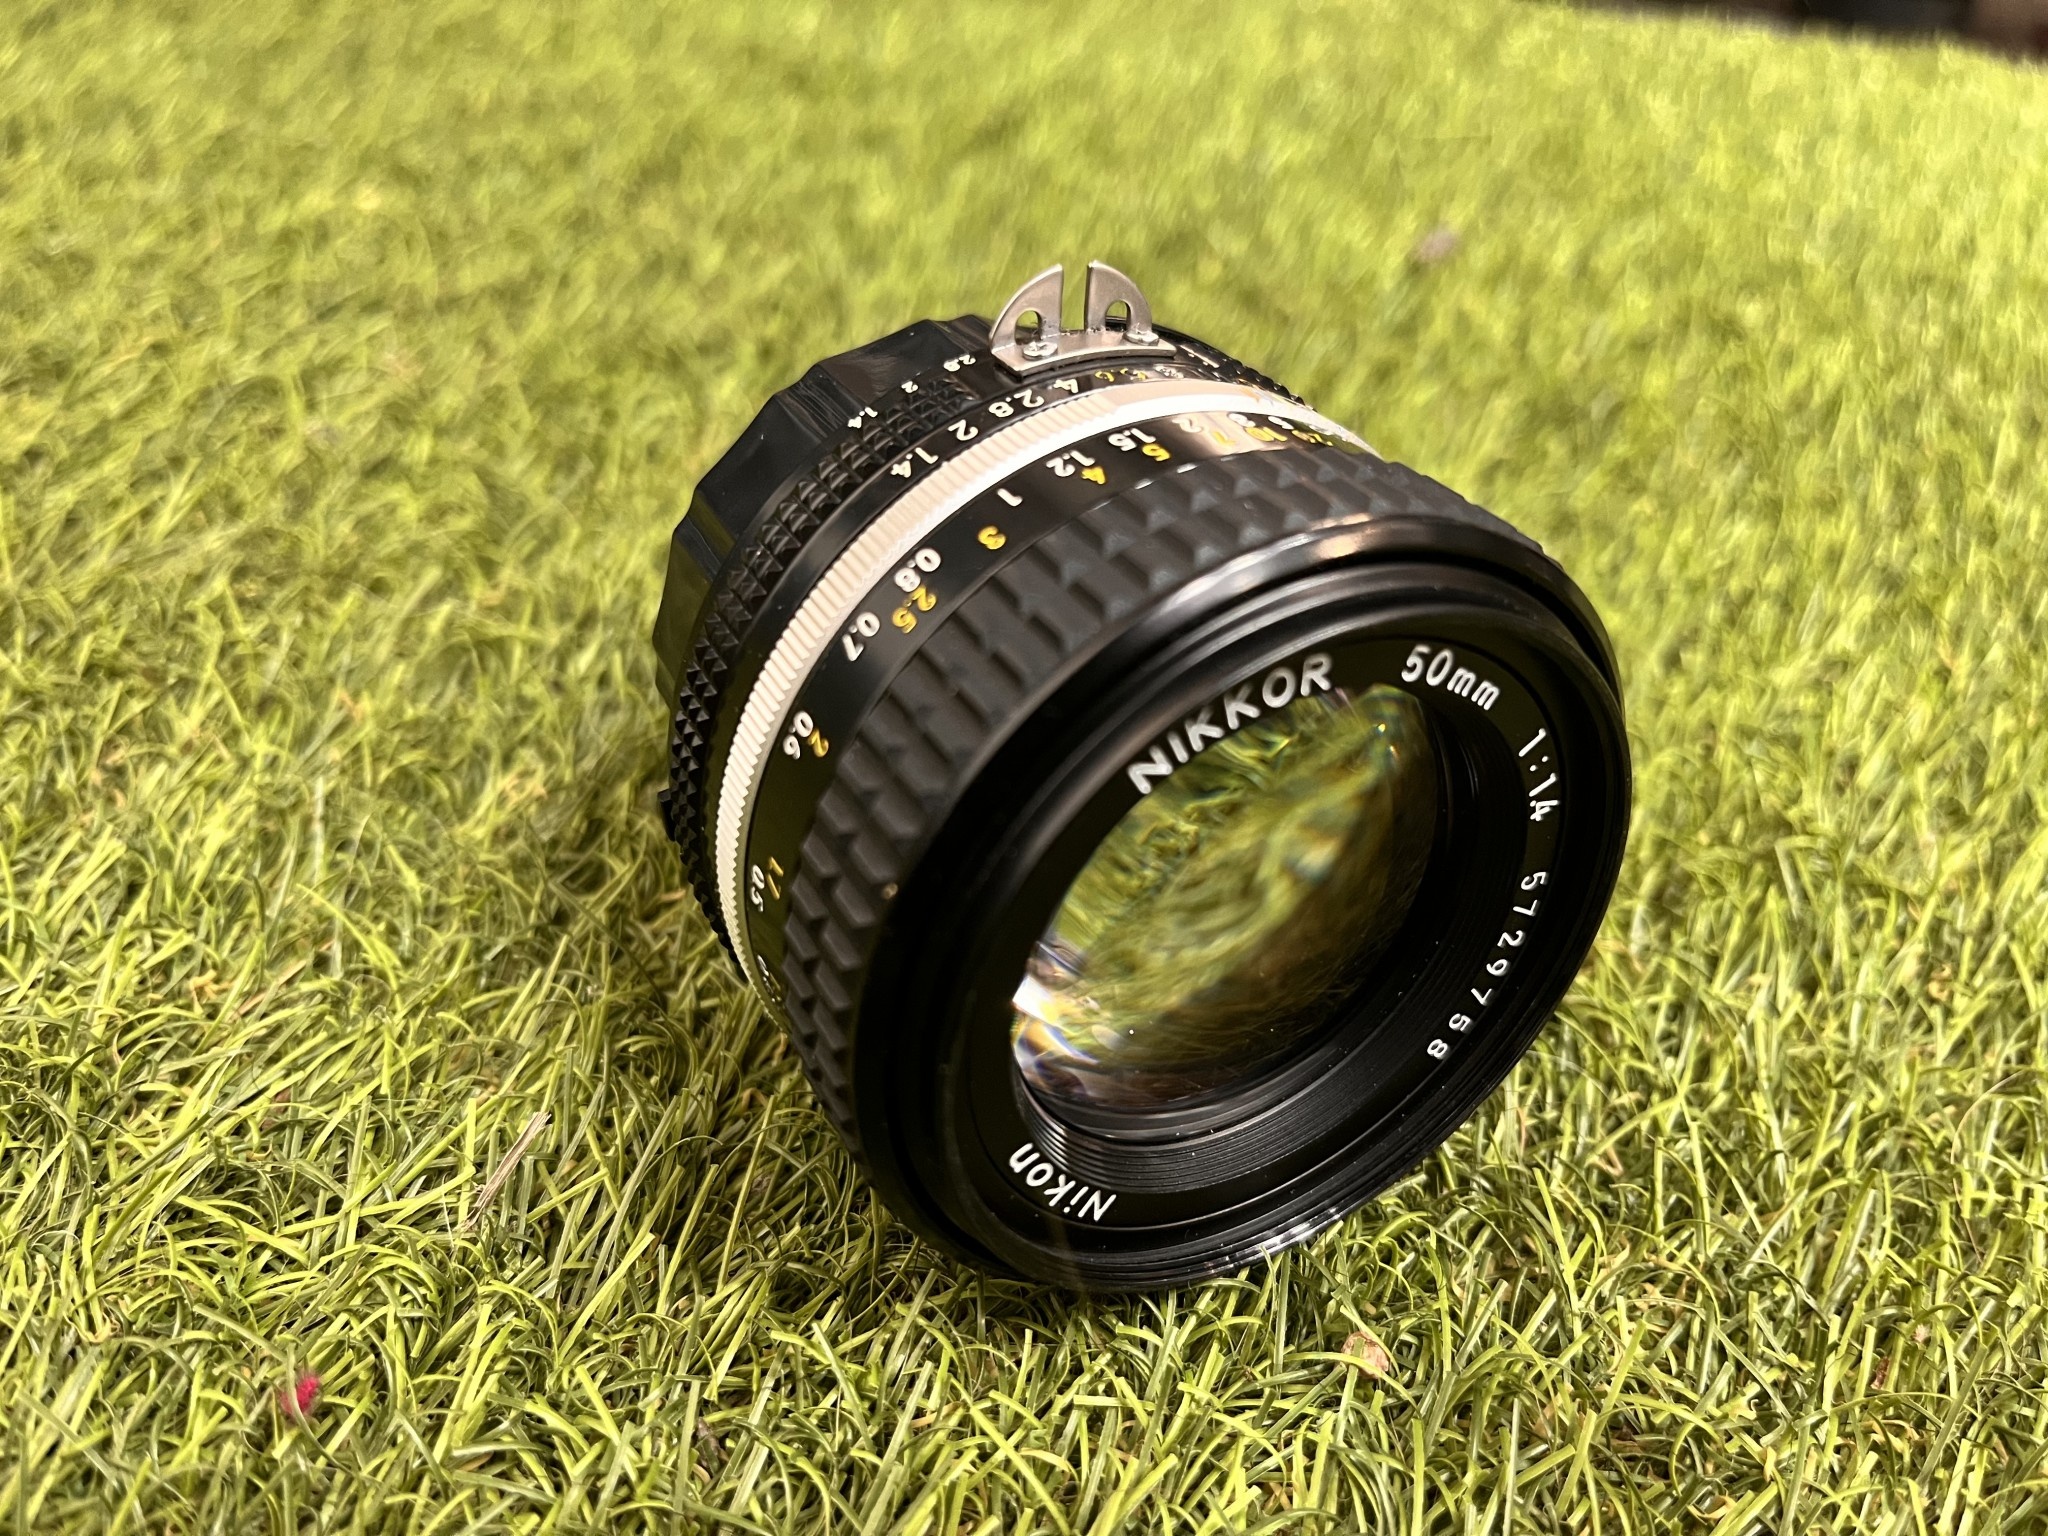 Nikon Nikkor F 50mm f/1.4 Ai lens - imagex